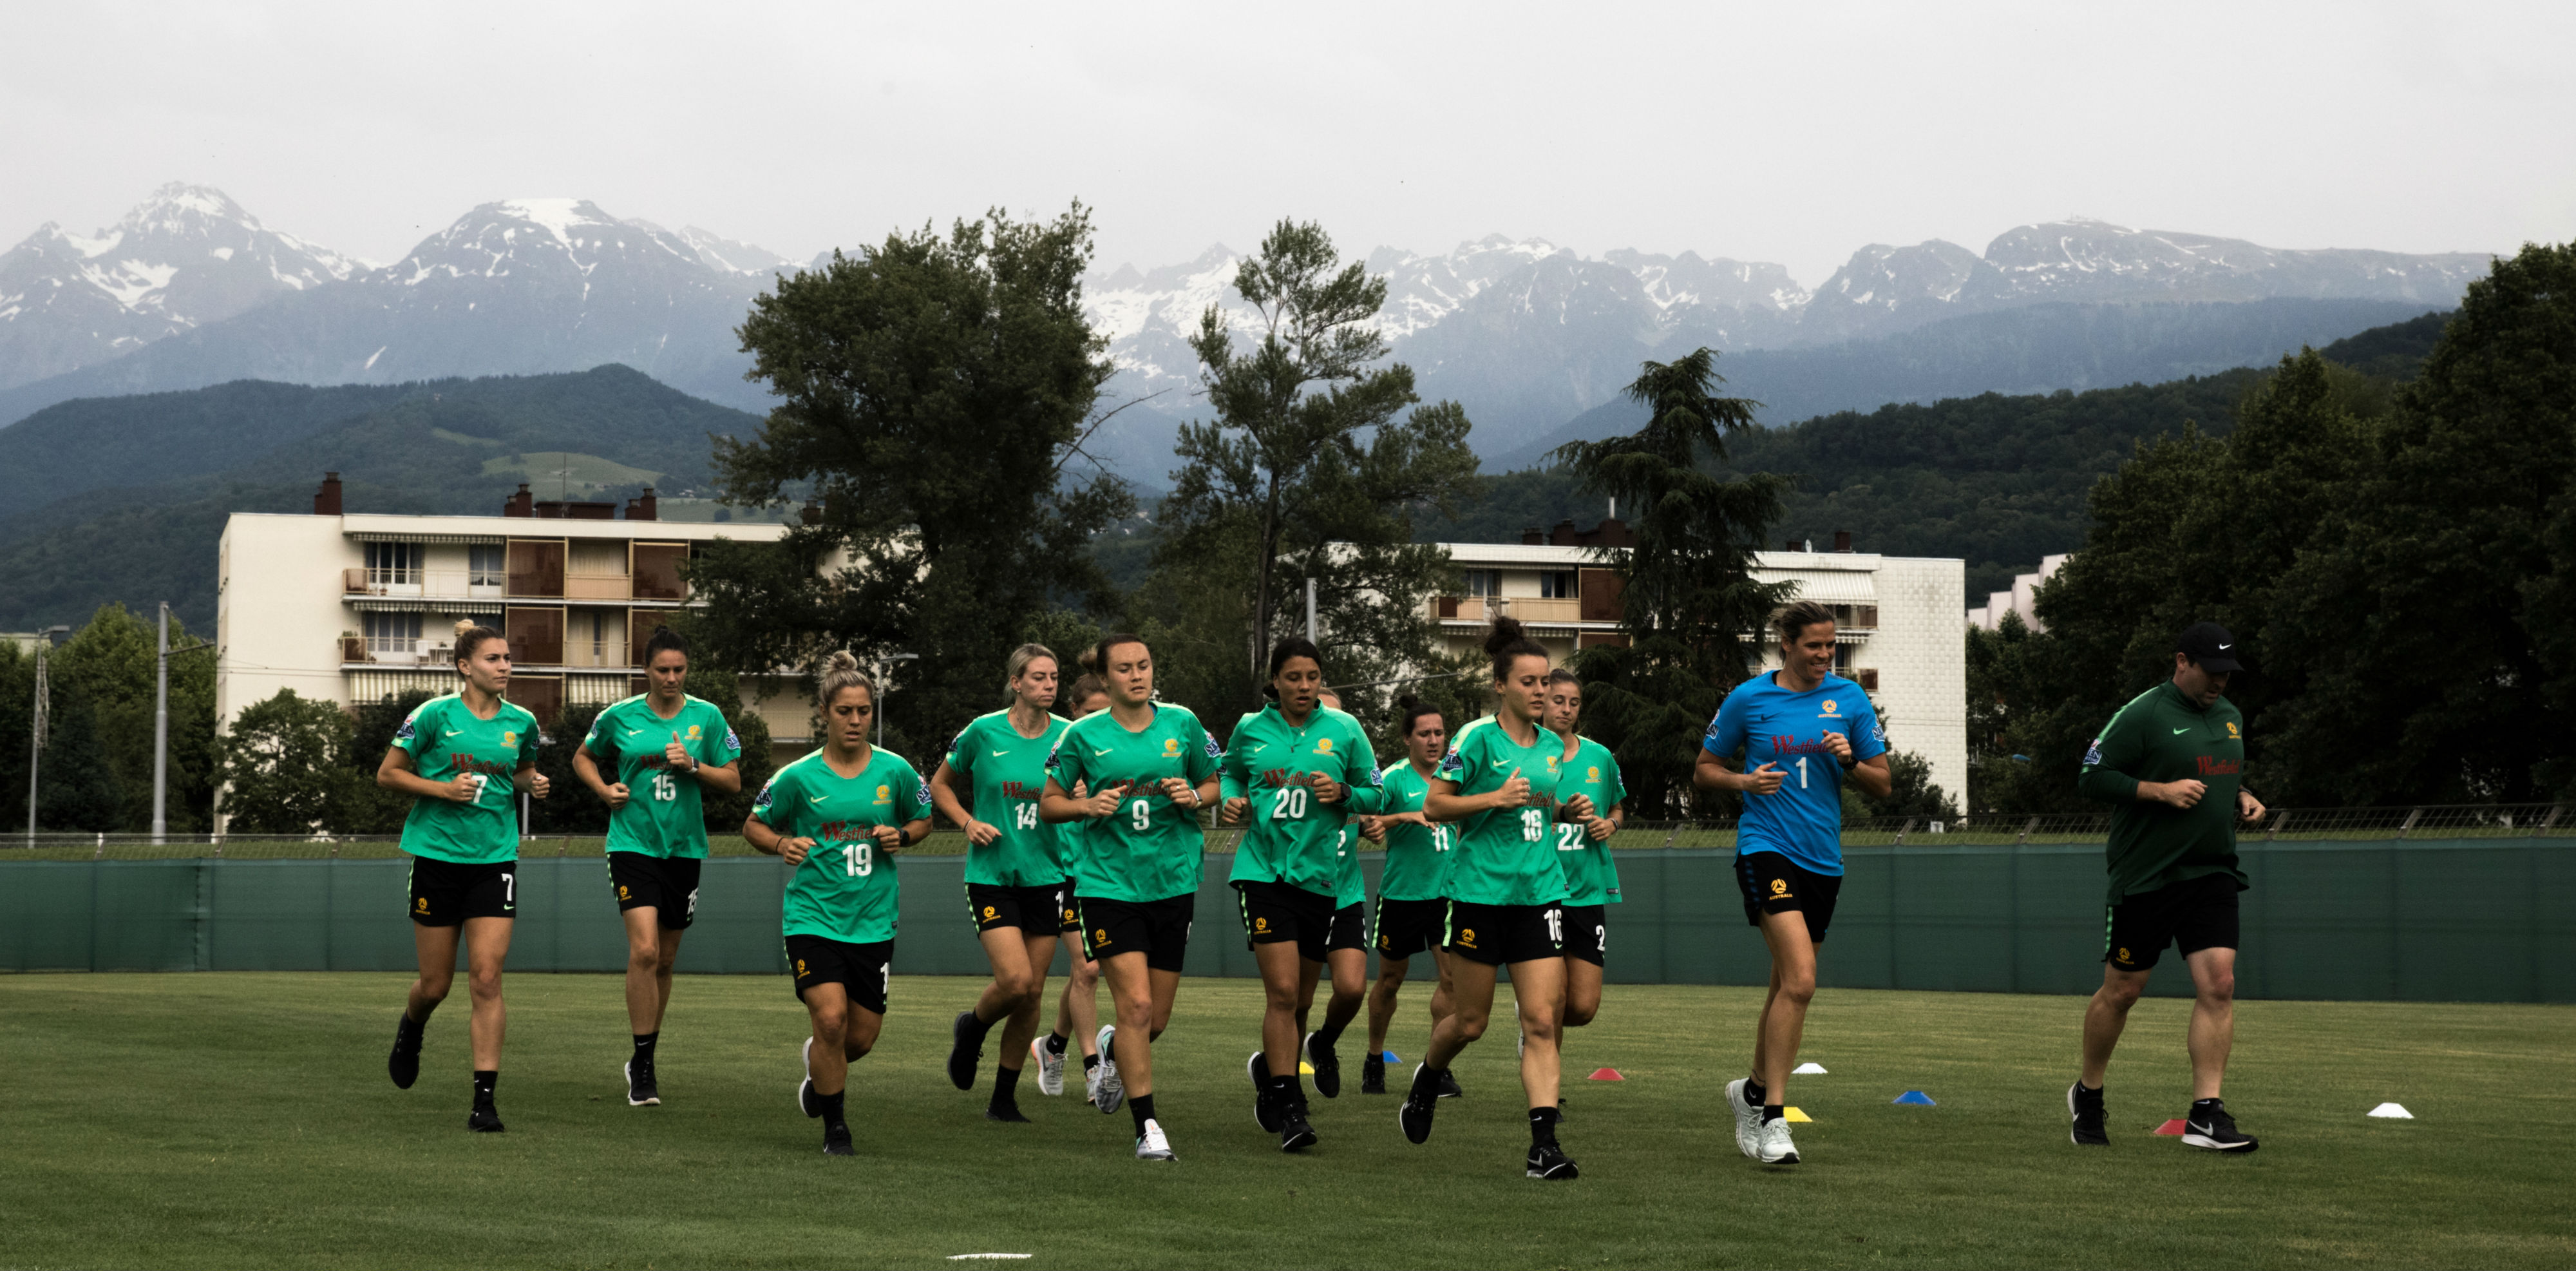 Matildas Grenoble training